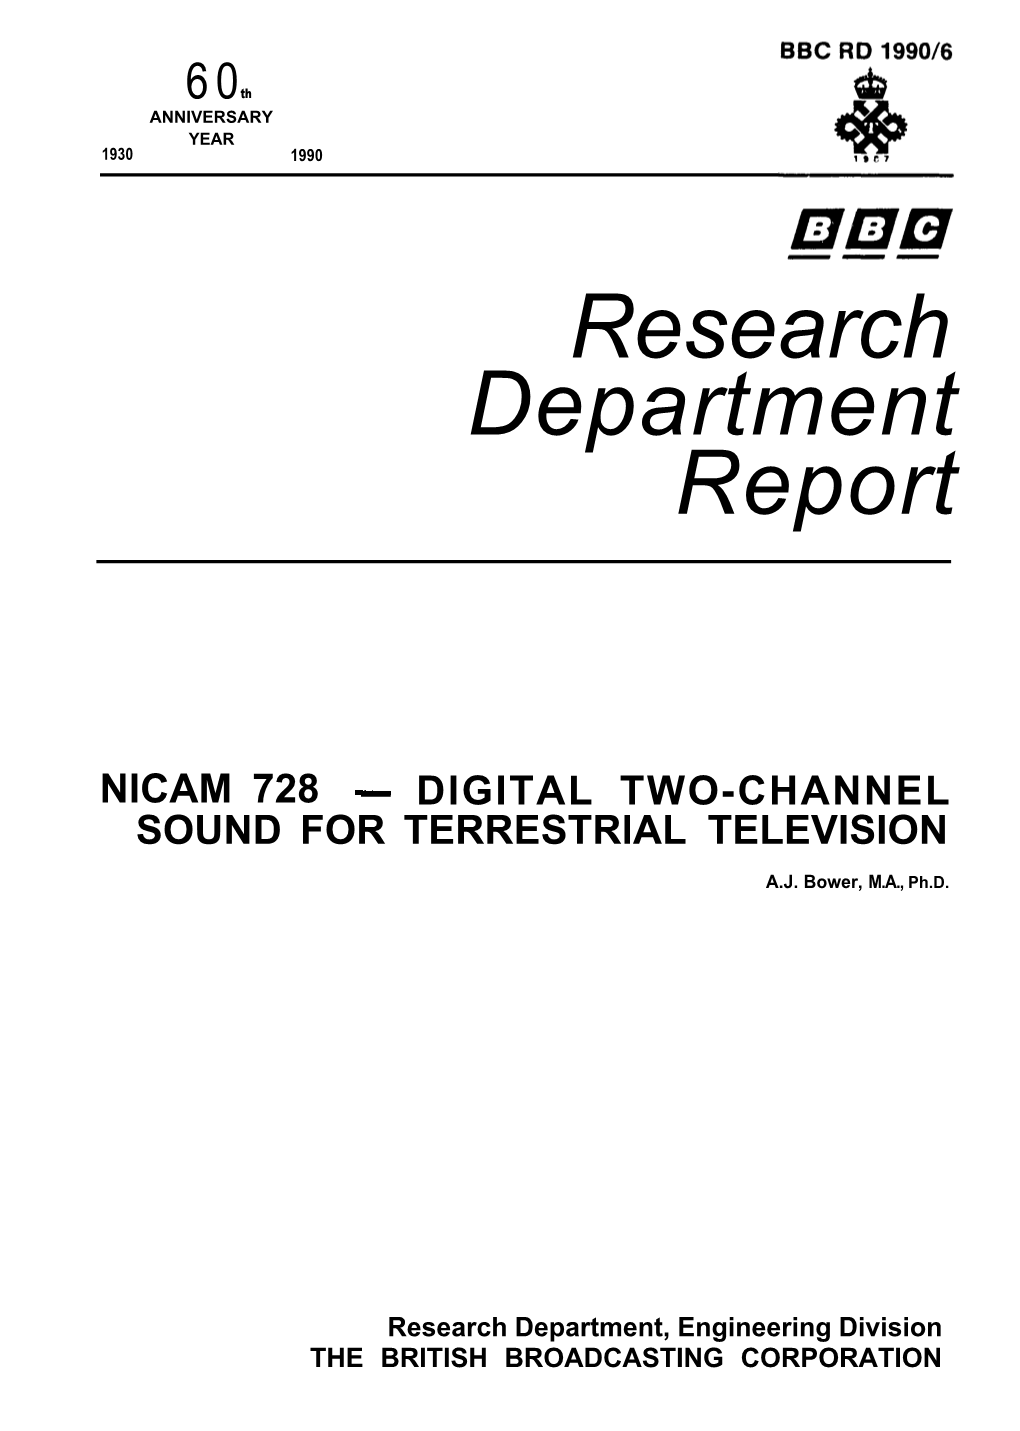 Research Department Report NICAM 728 DIGITAL TWO